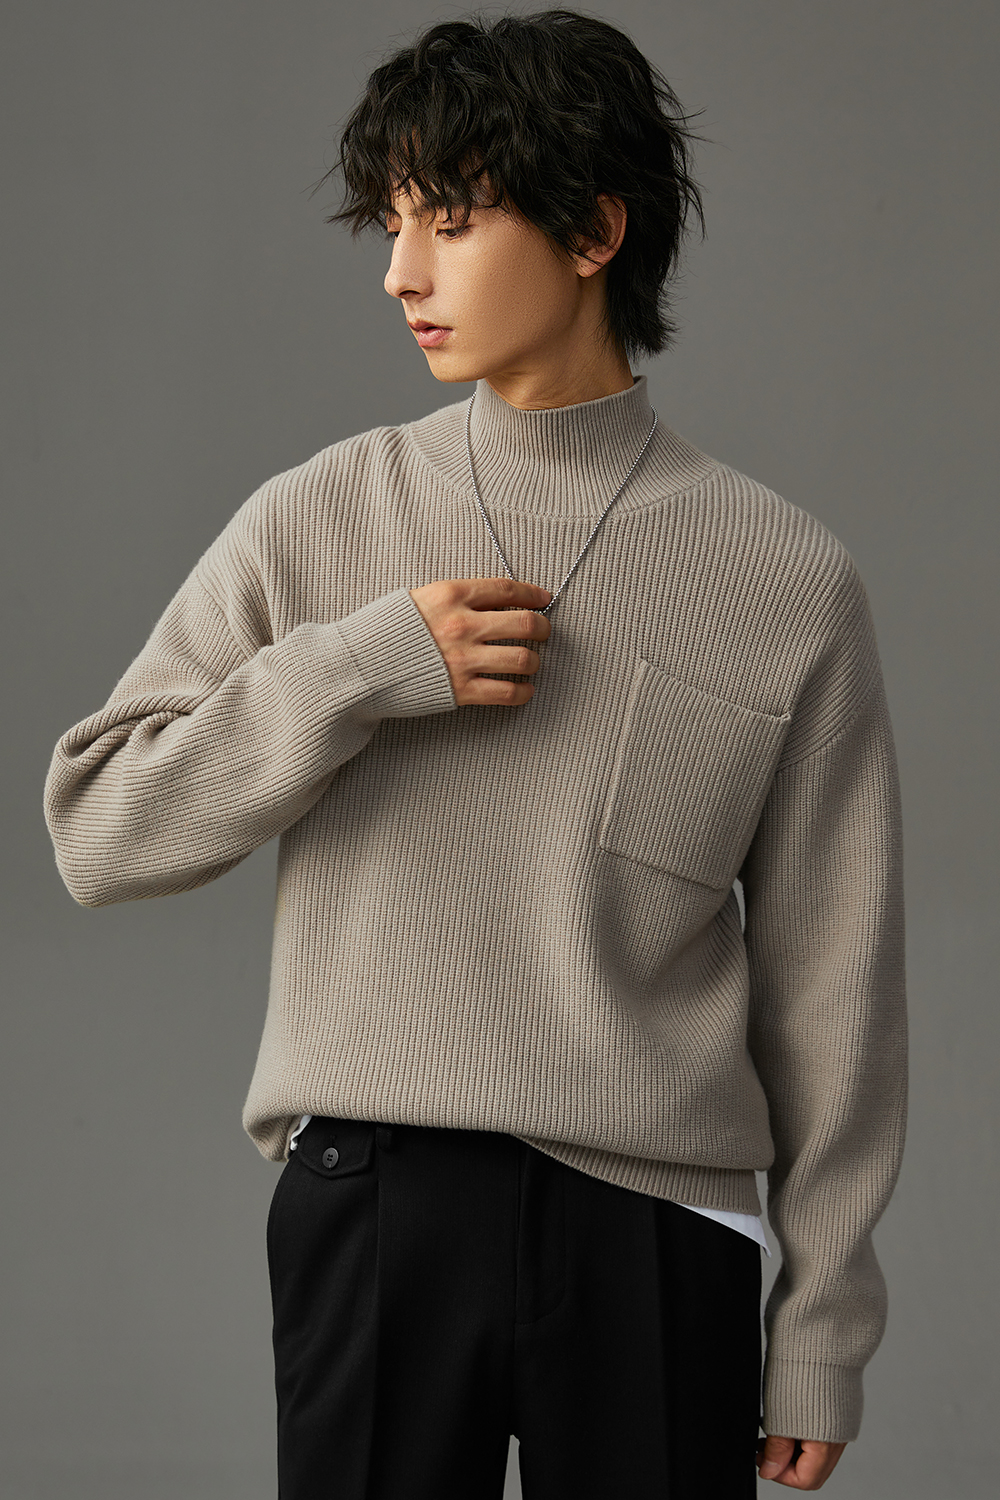 Designer Men's Turtleneck Sweater off white